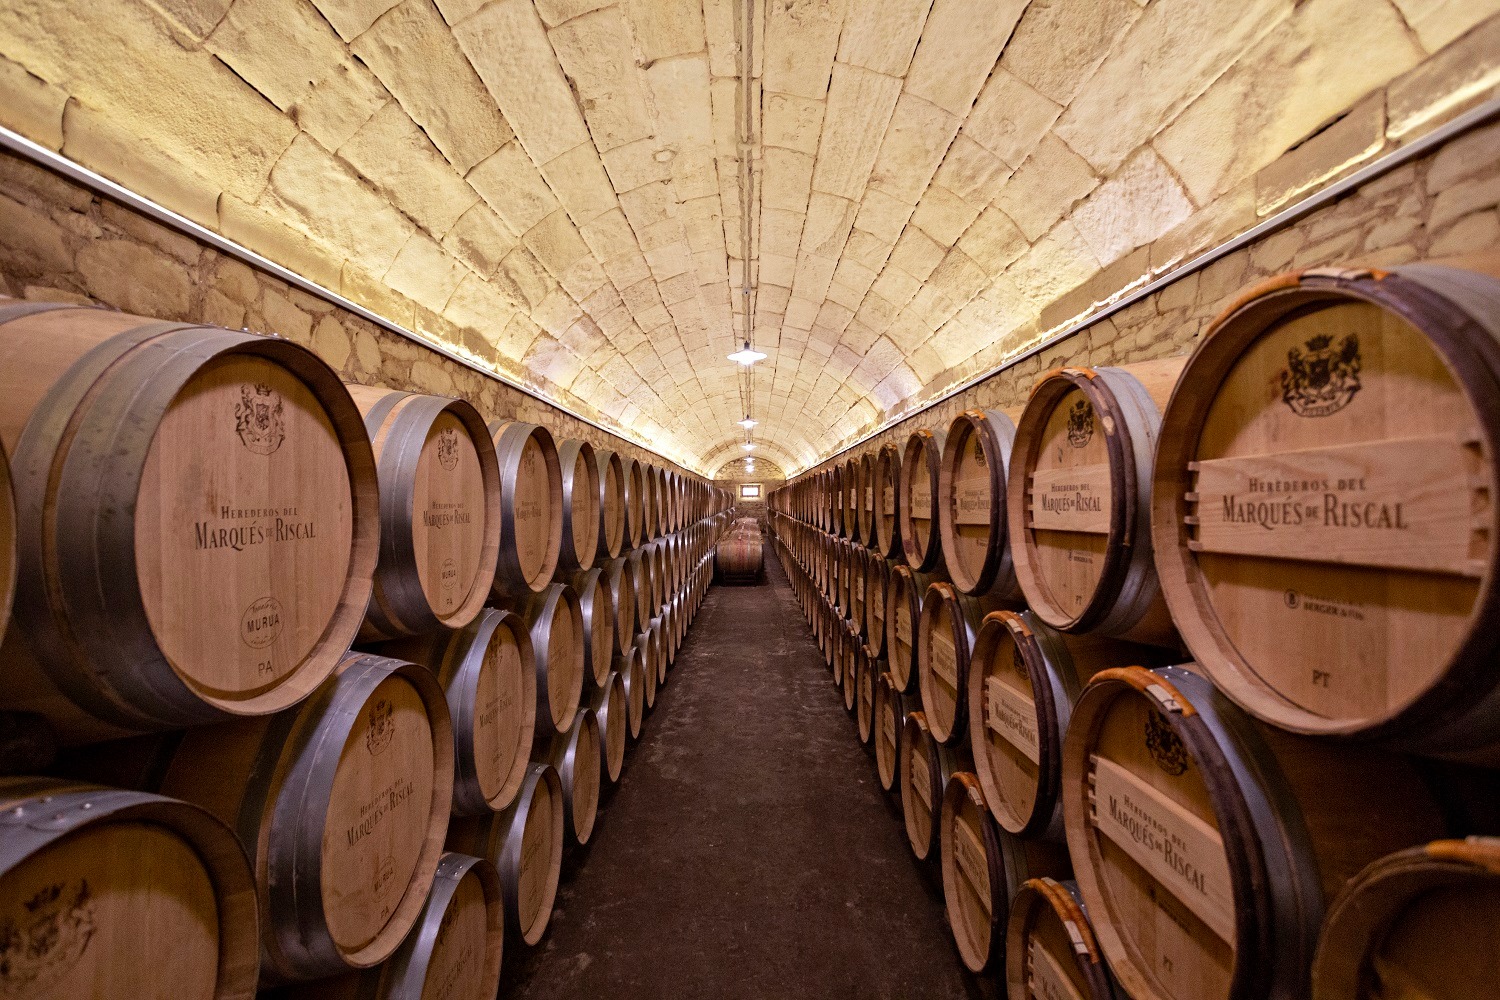 Marques de Riscal Rioja Reserva 2016